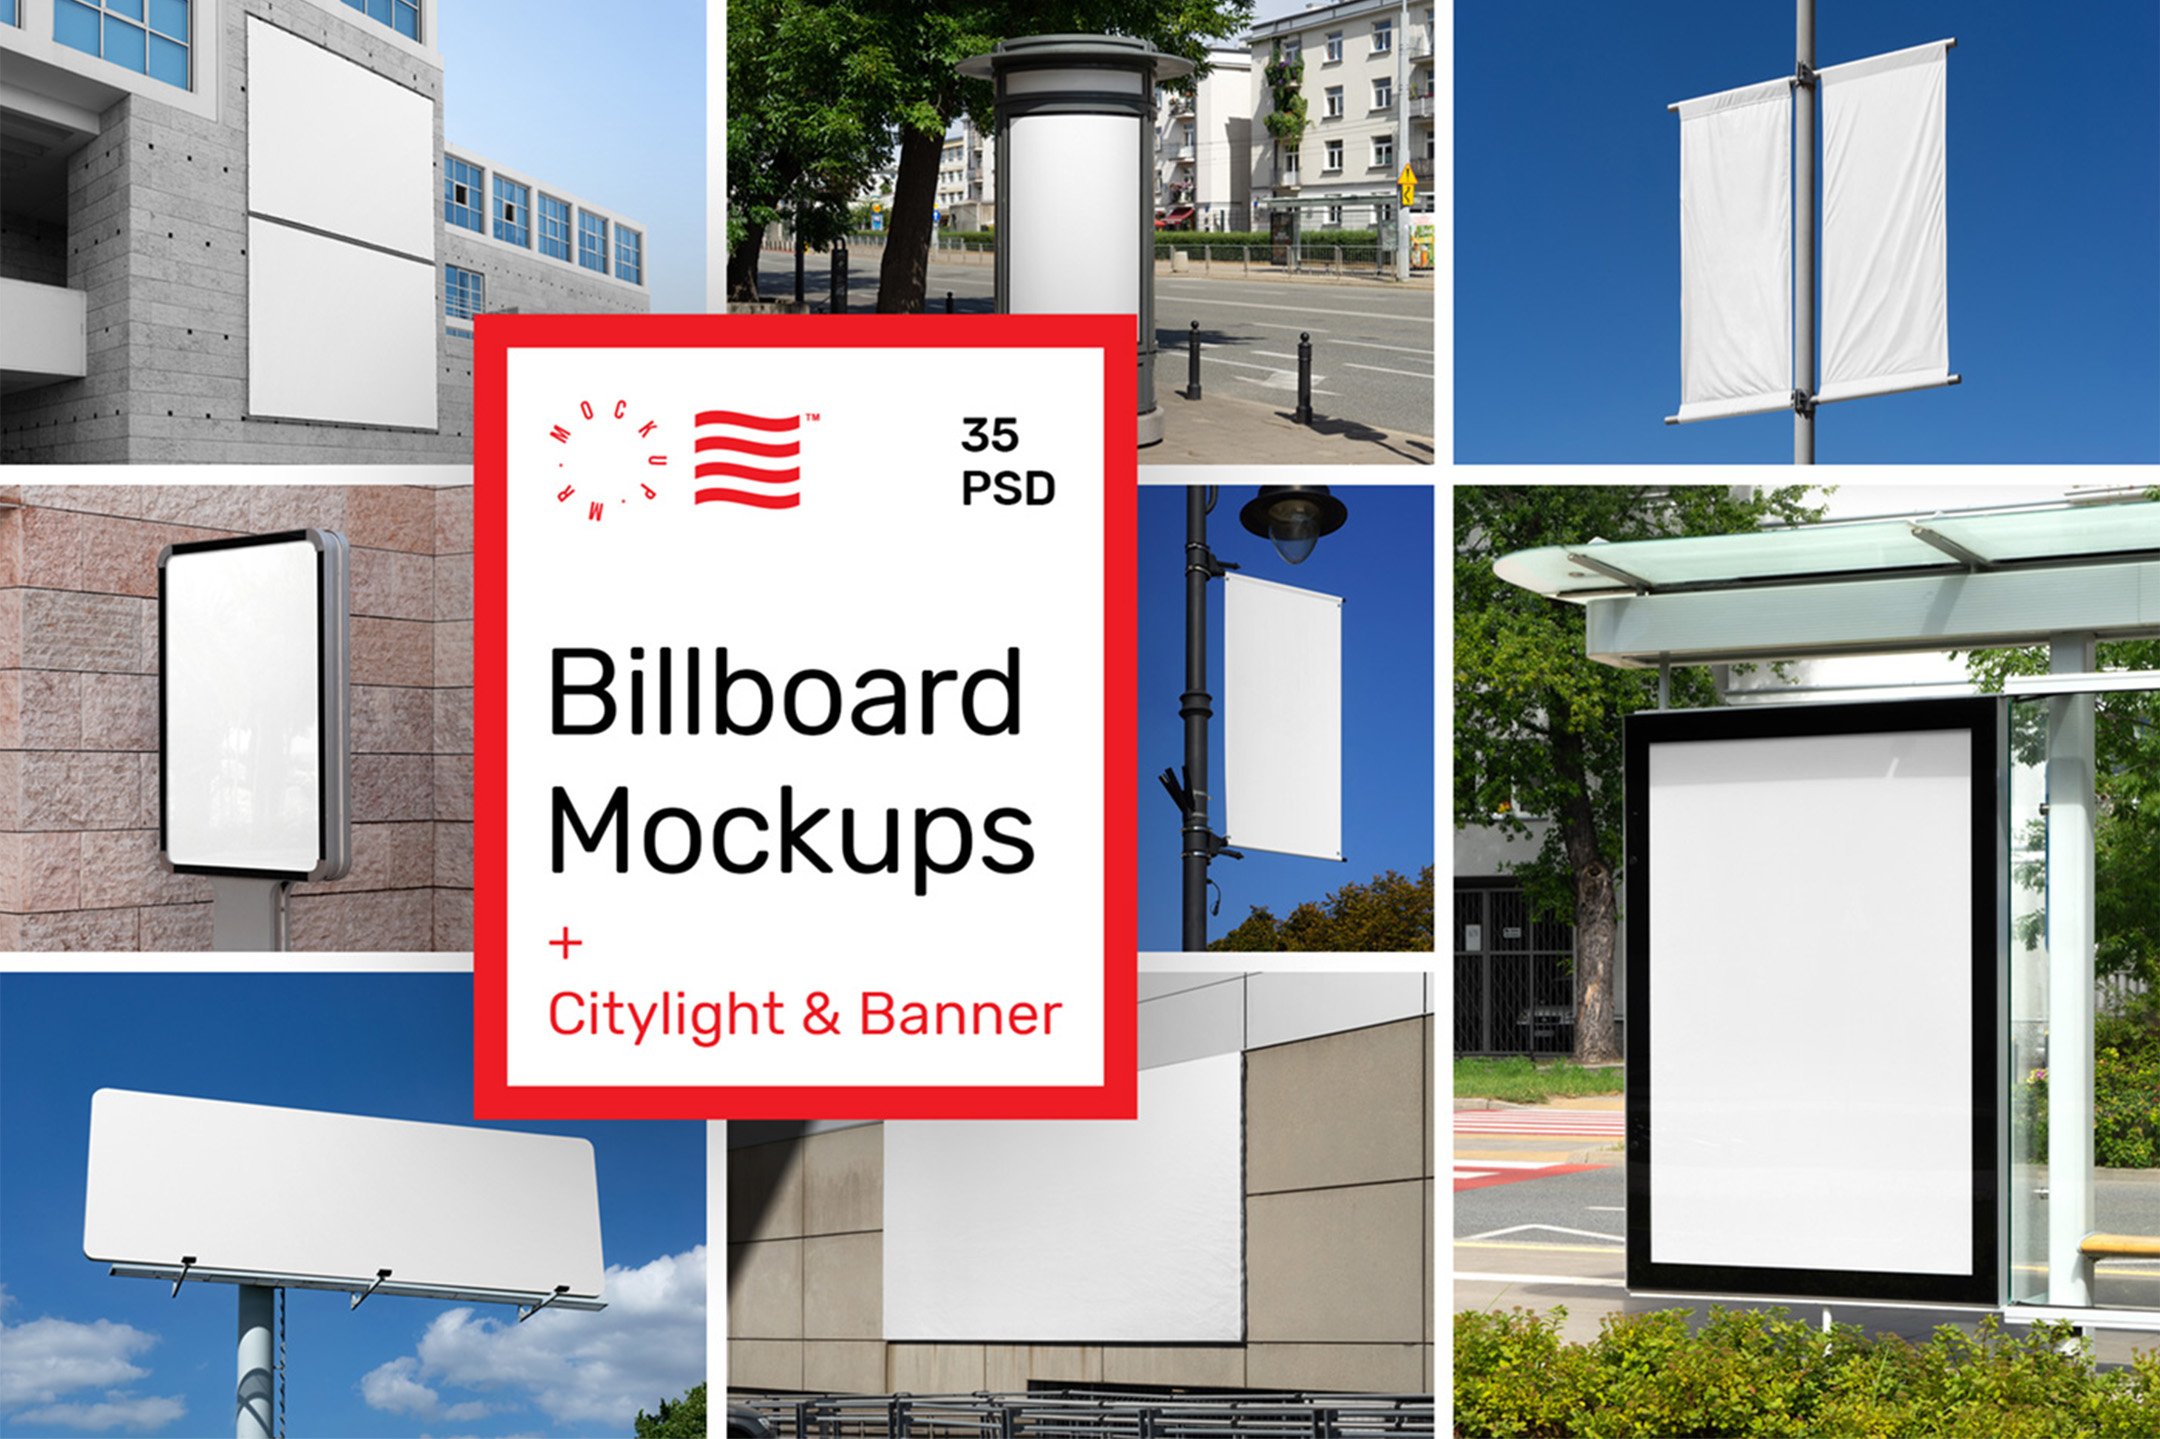 City Billboard Mockups & Banners cover image.